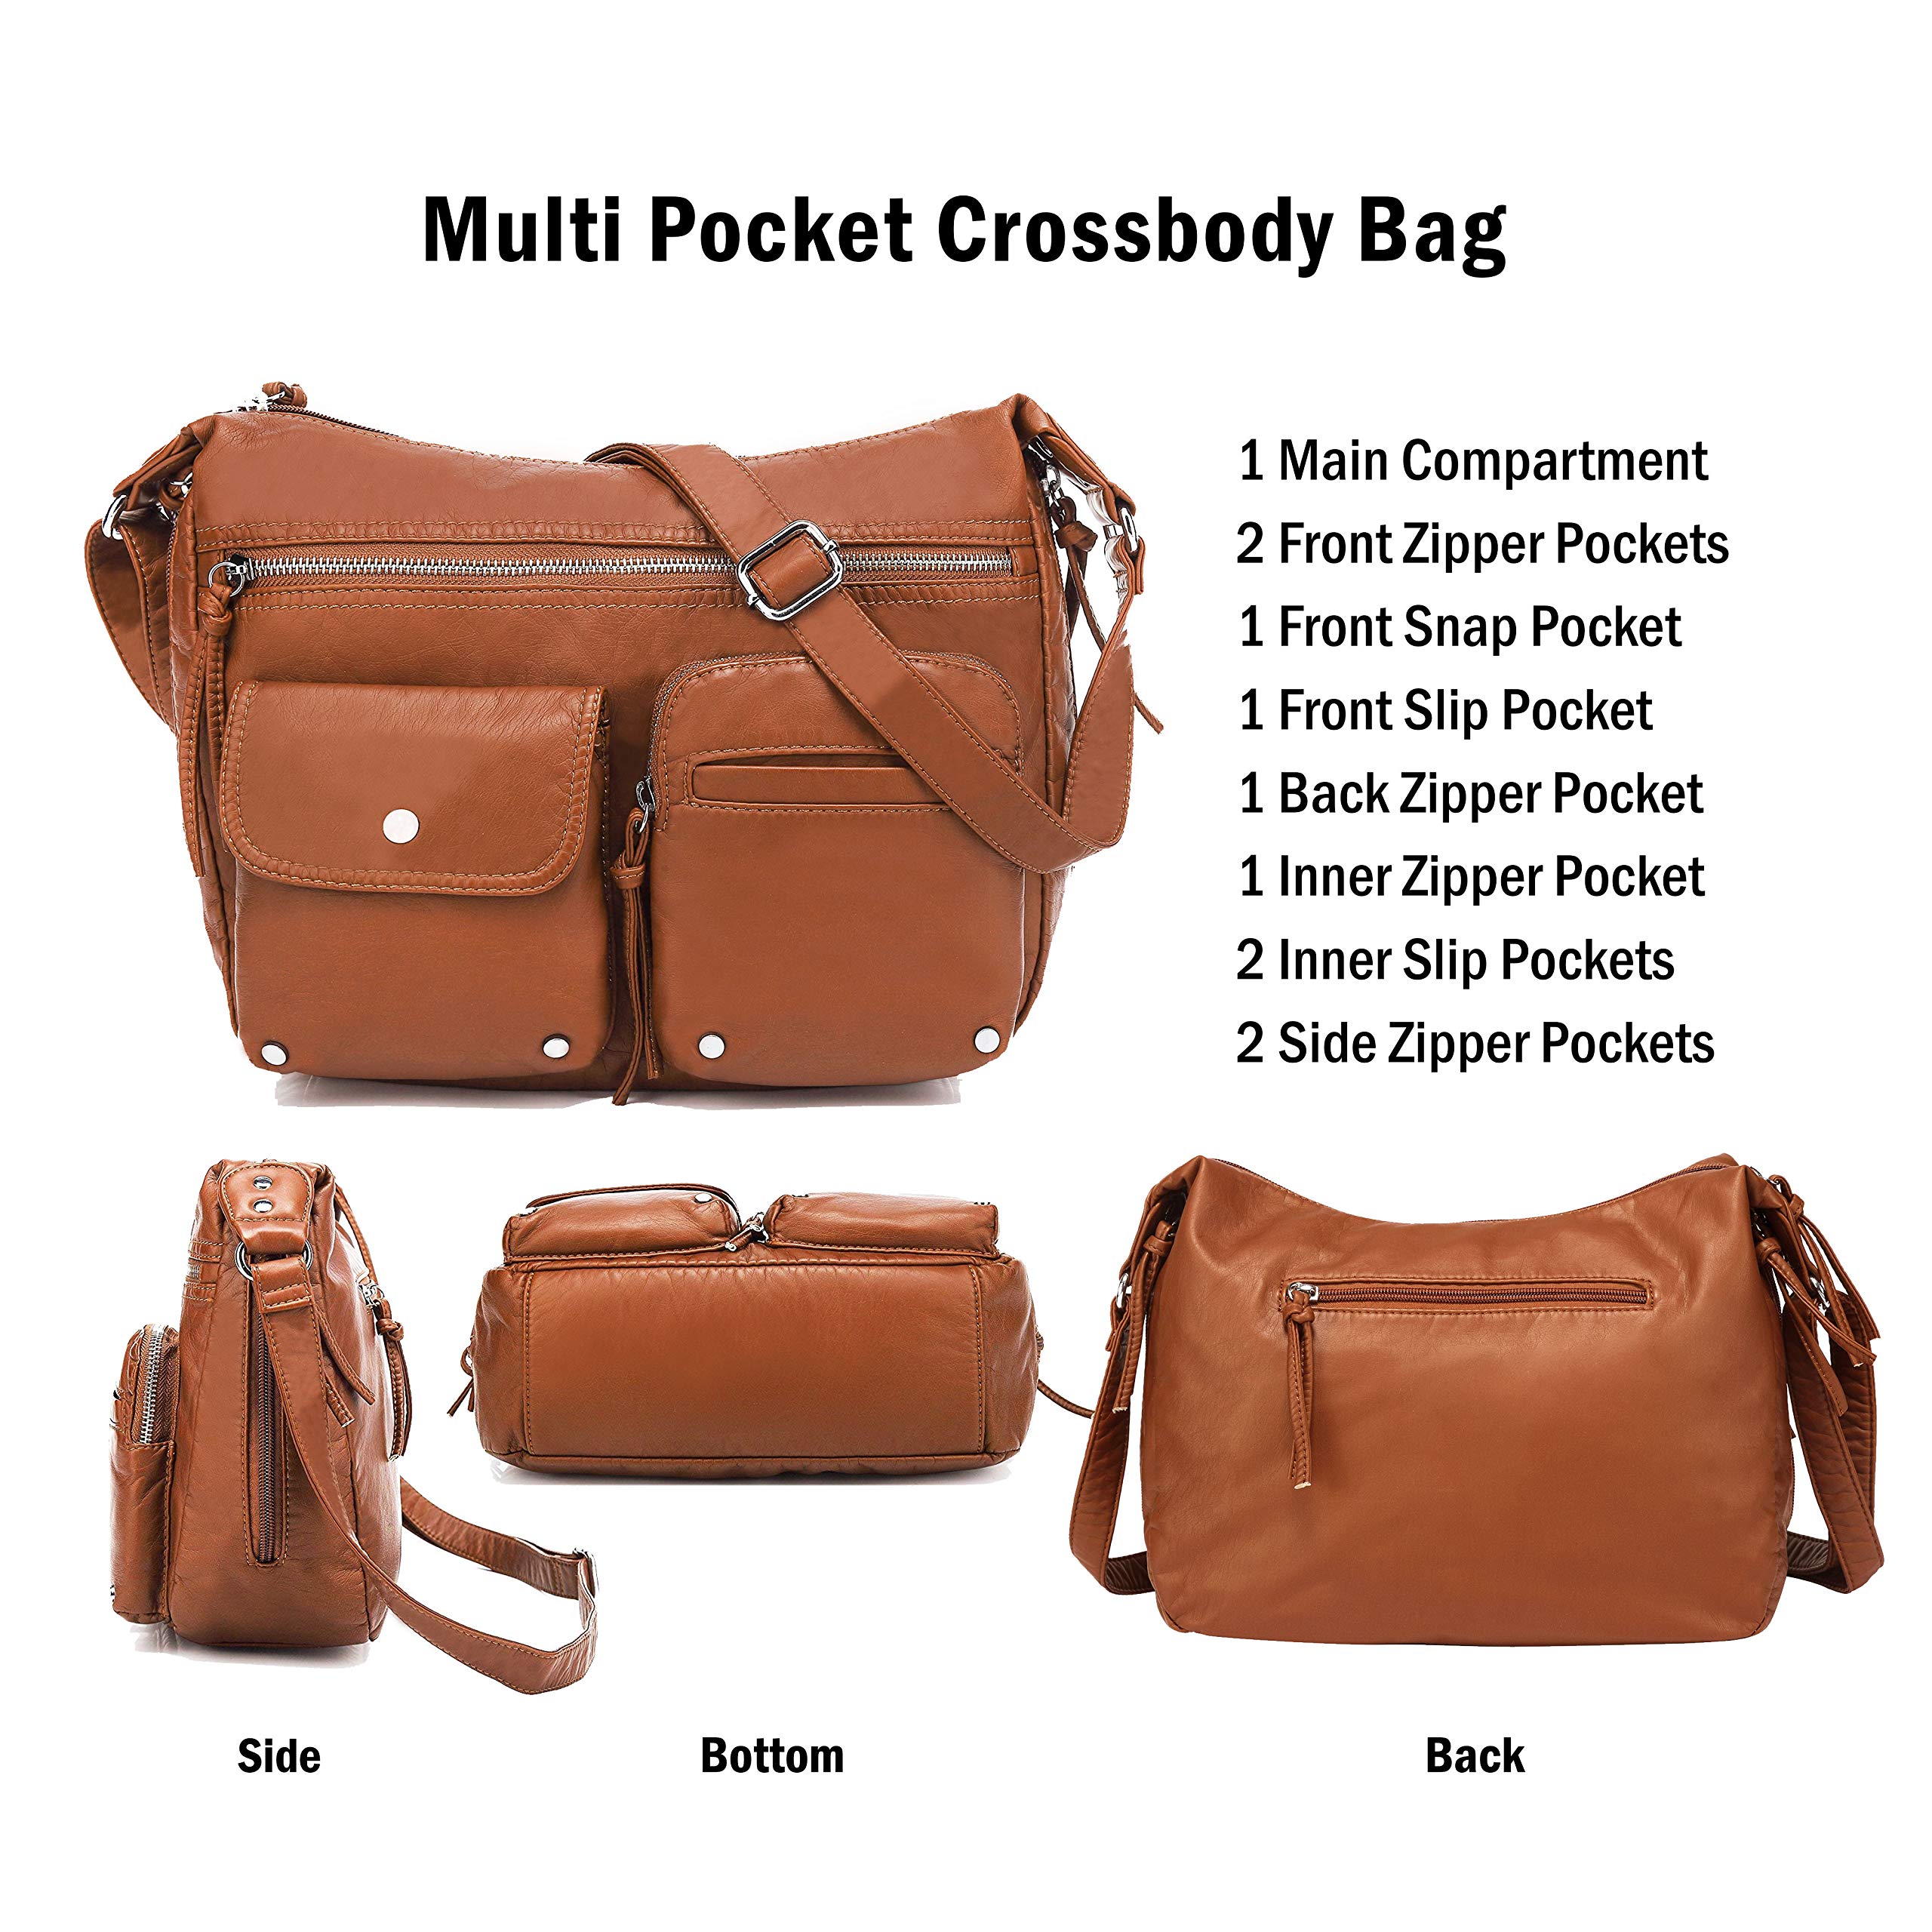 Scarleton Medium Crossbody Shoulder Bag for Women, H1800 - Walmart.com